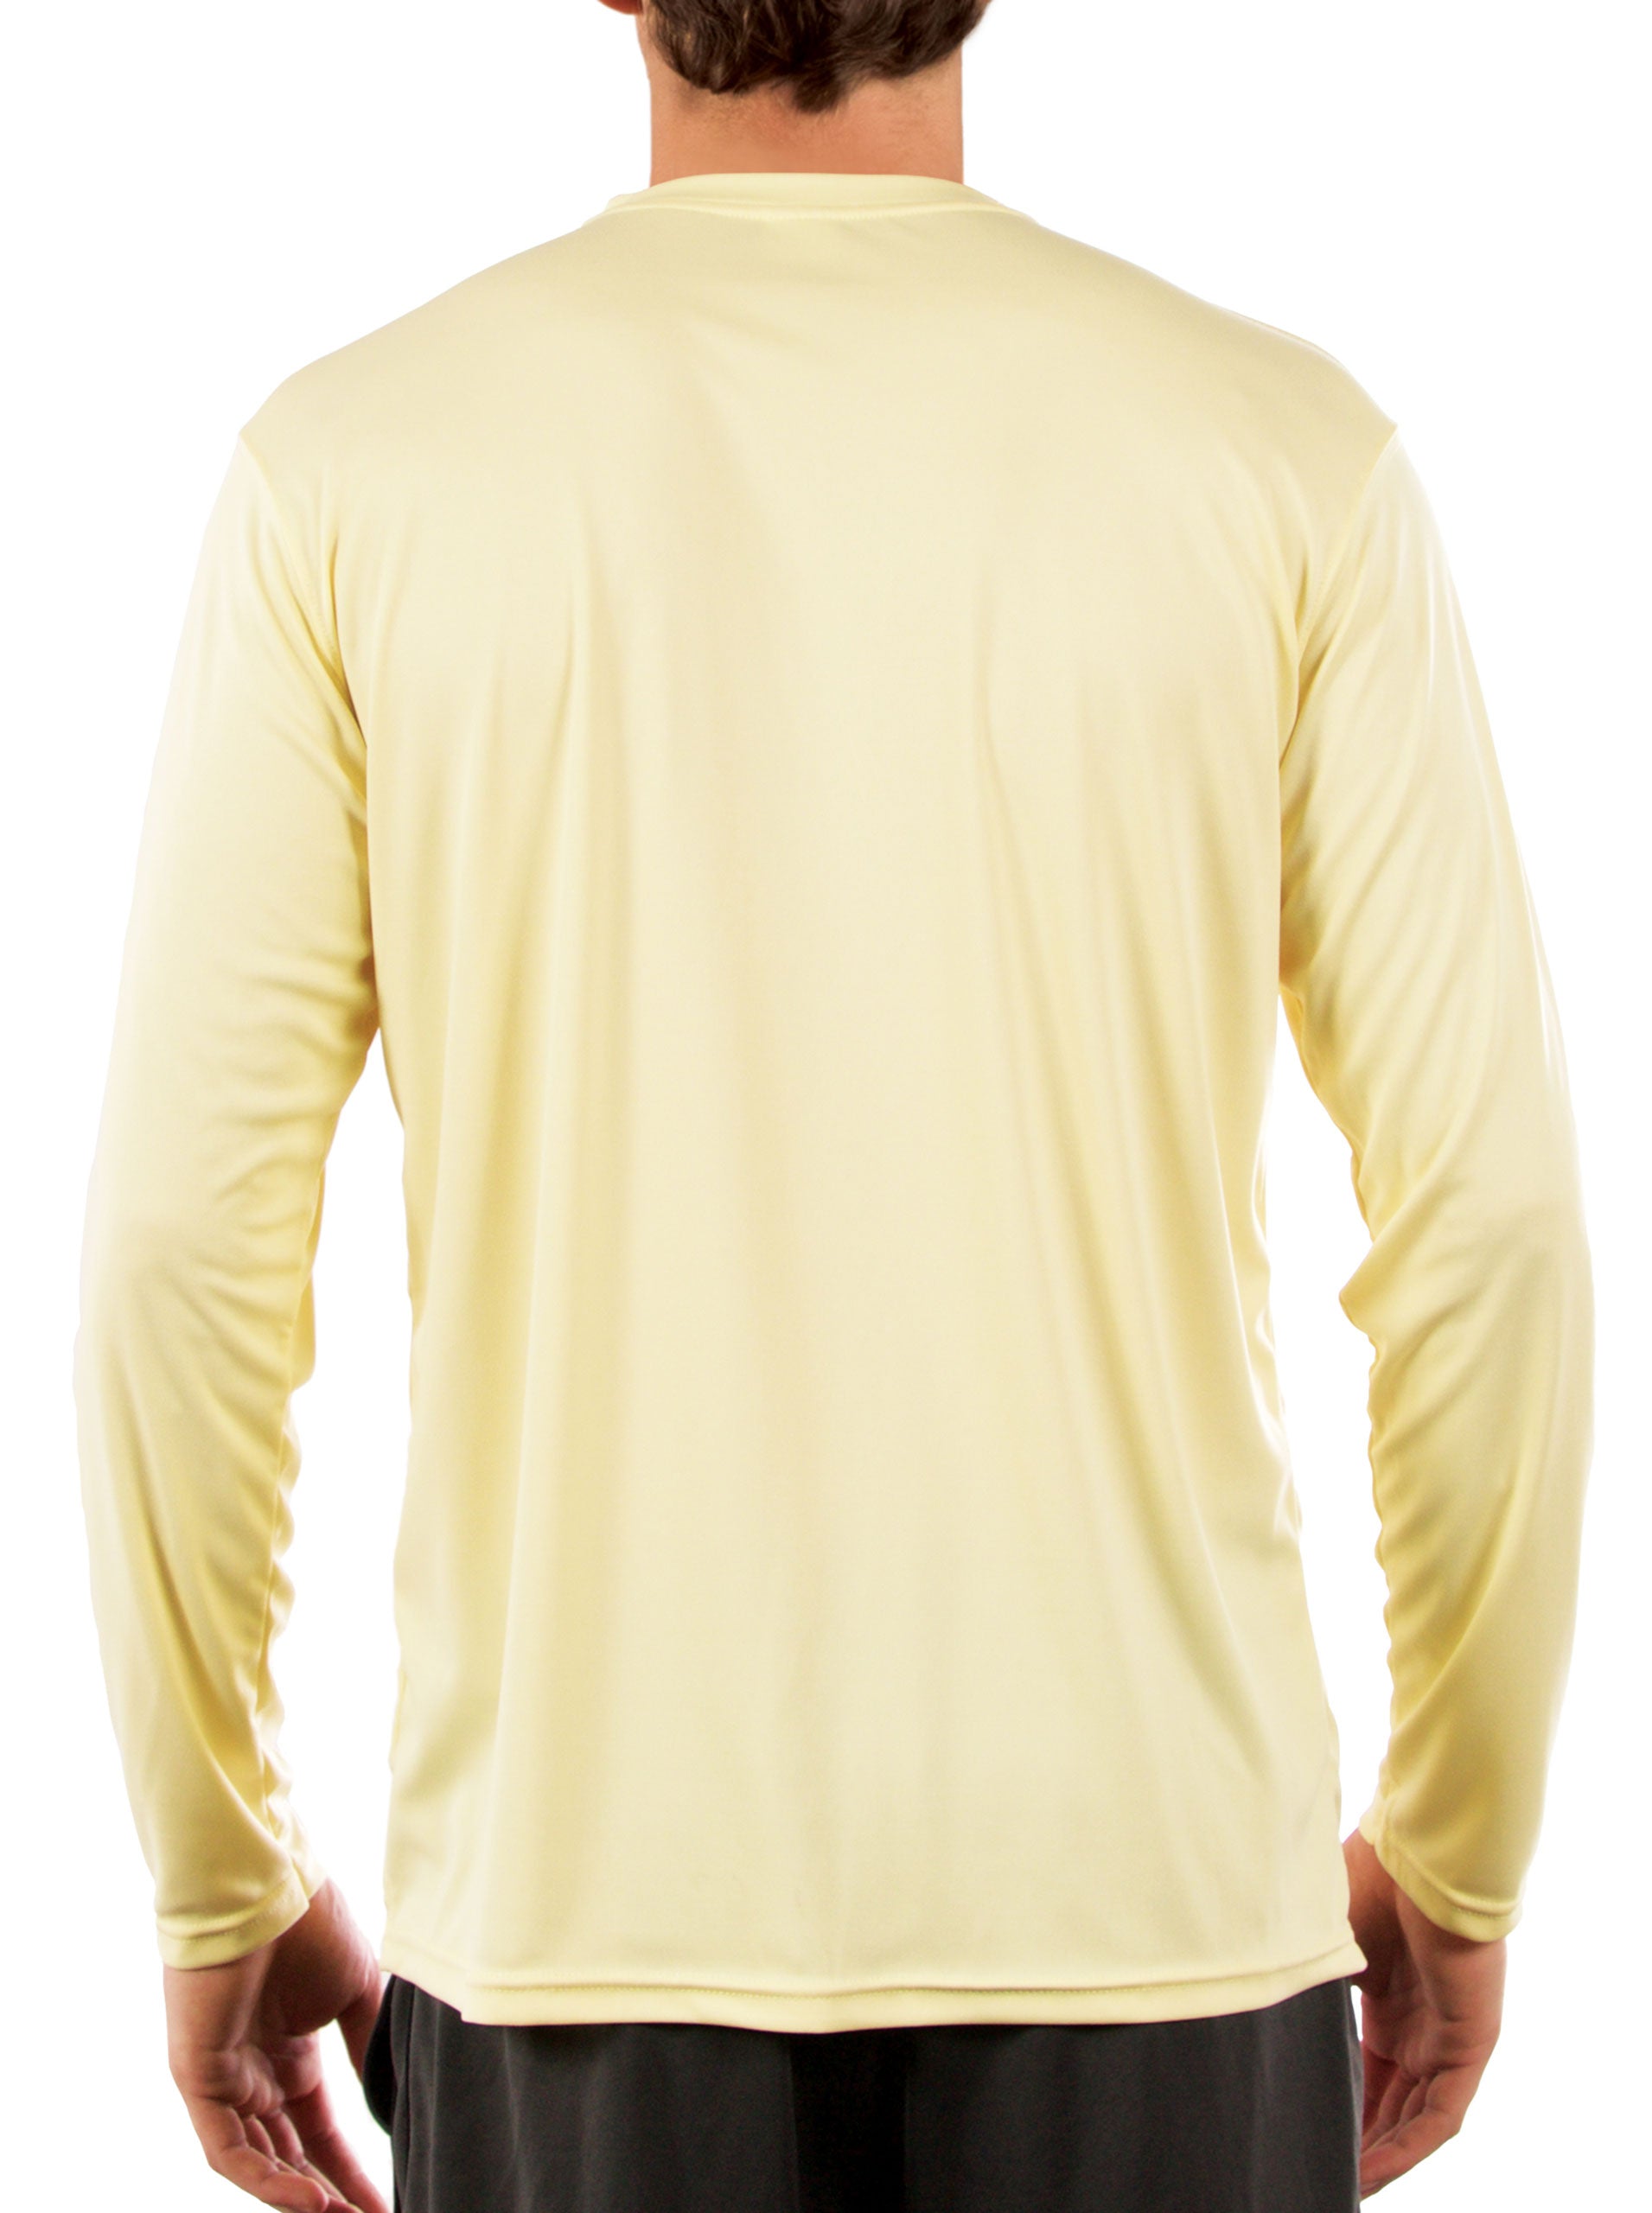 Fishing Shirts Men's Quick Dry Lightweight UPF 50+ Long Sleeve Shirts Rash Guard Swim Shirts Hiking Shirts Moisture Wicking 4XL / White